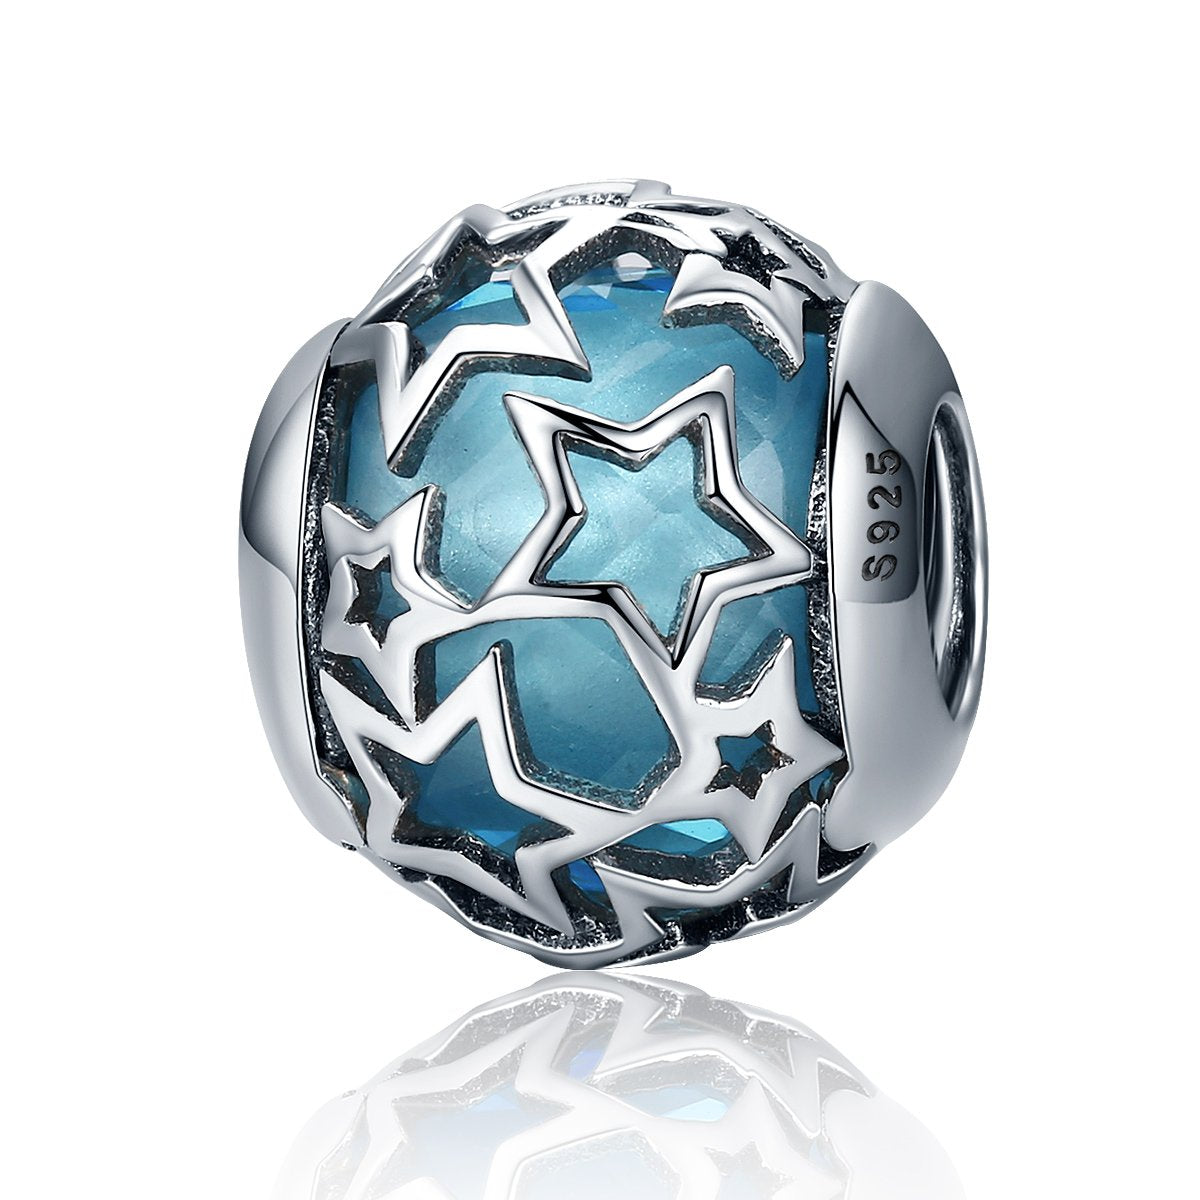 Sterling 925 silver charm the green sky bead pendant fits Pandora charm and European charm bracelet Xaxe.com